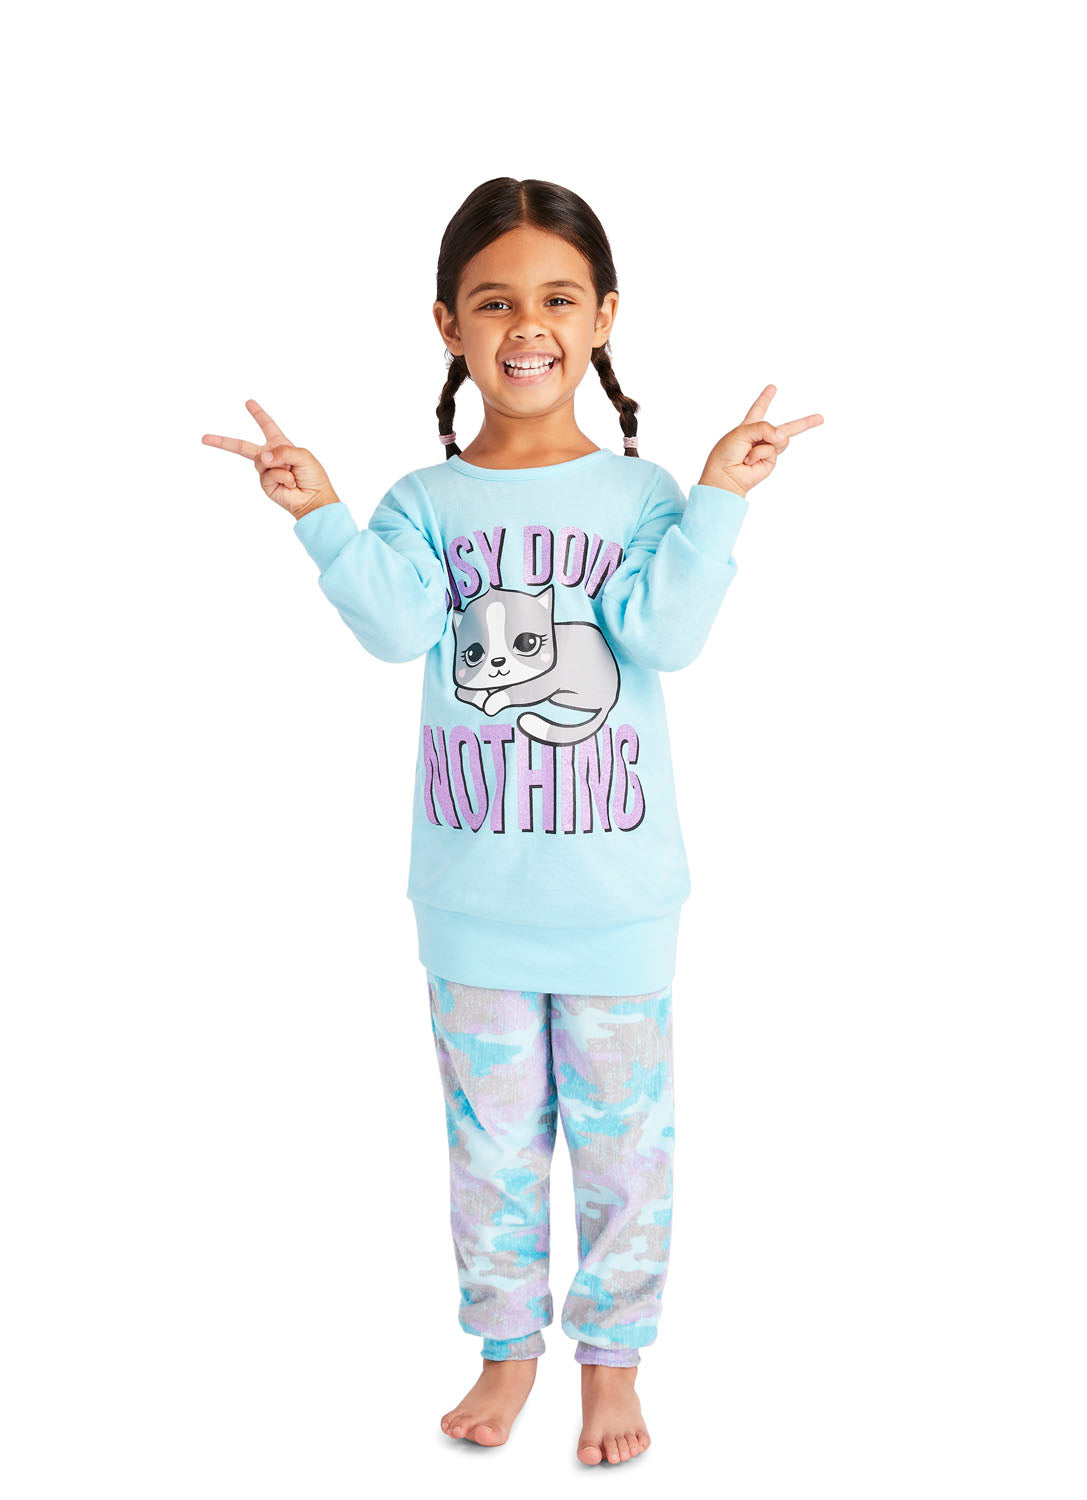 Fun Little Girl wearing Cat print Pajama Set in Aqua colour